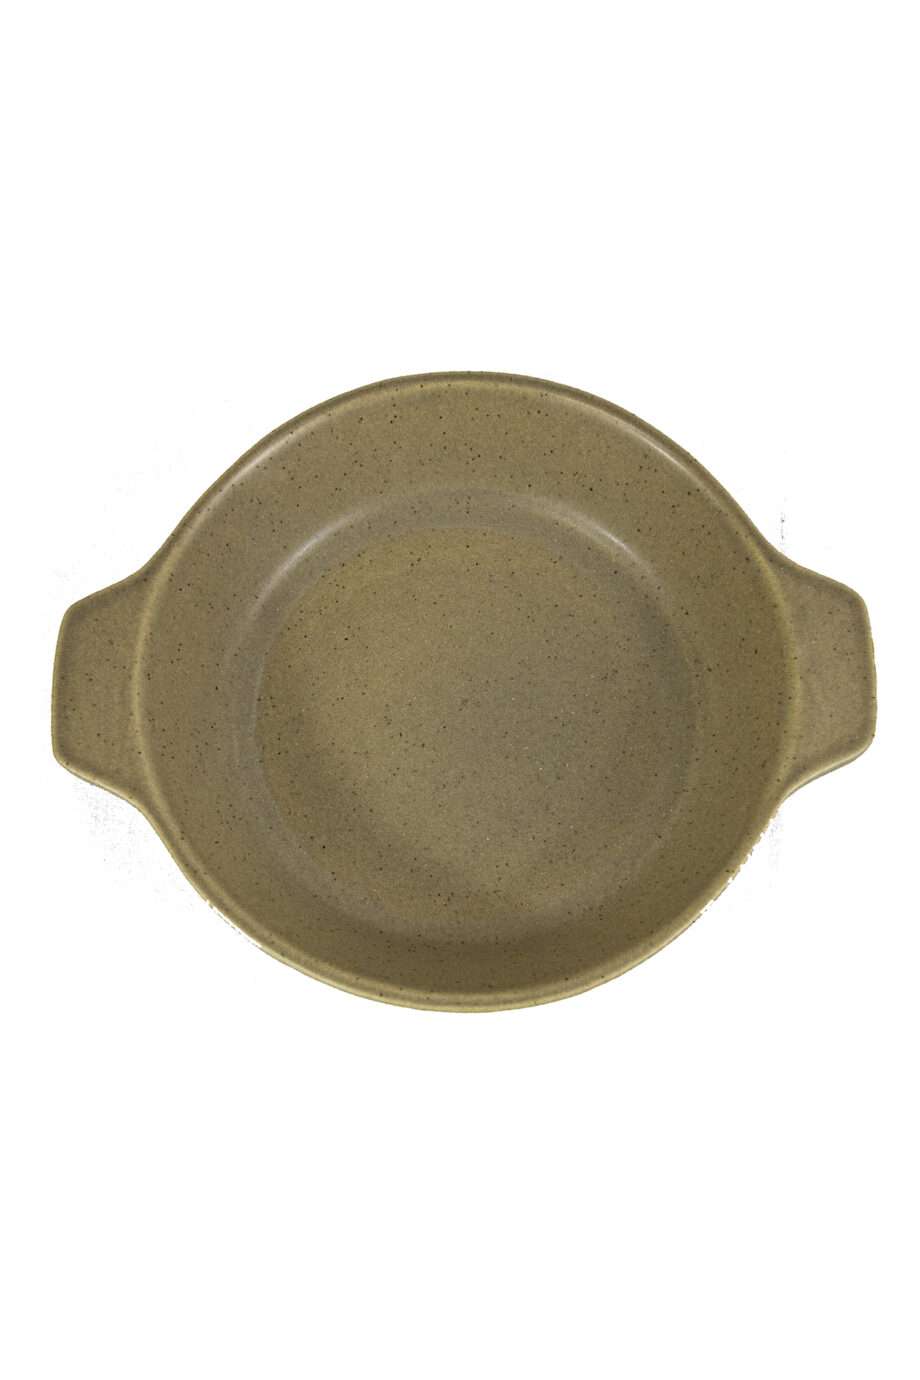 oven plate mustard mat ceramic large